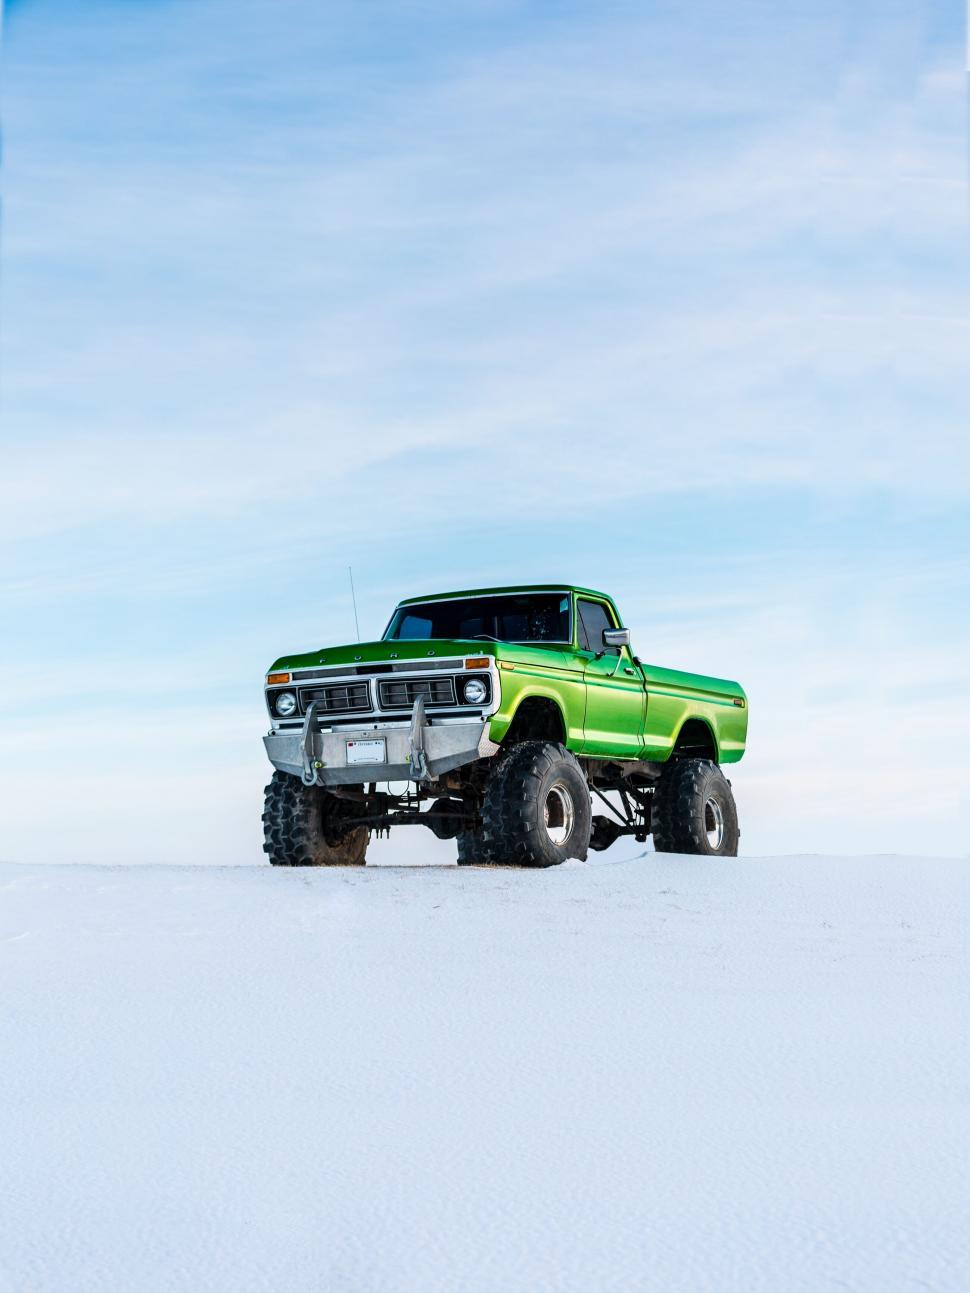 Free Image of Green monster truck on snowy terrain 